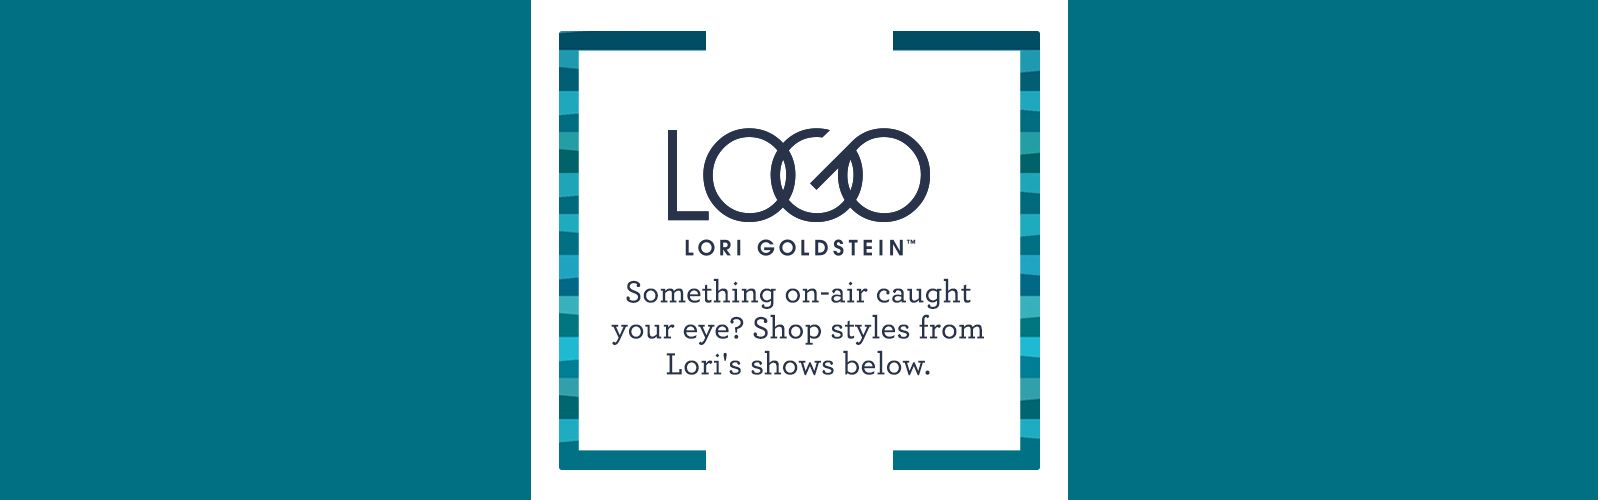 LOGO by Lori Goldstein Petite Shadow Patch Boyfriend Jeans 